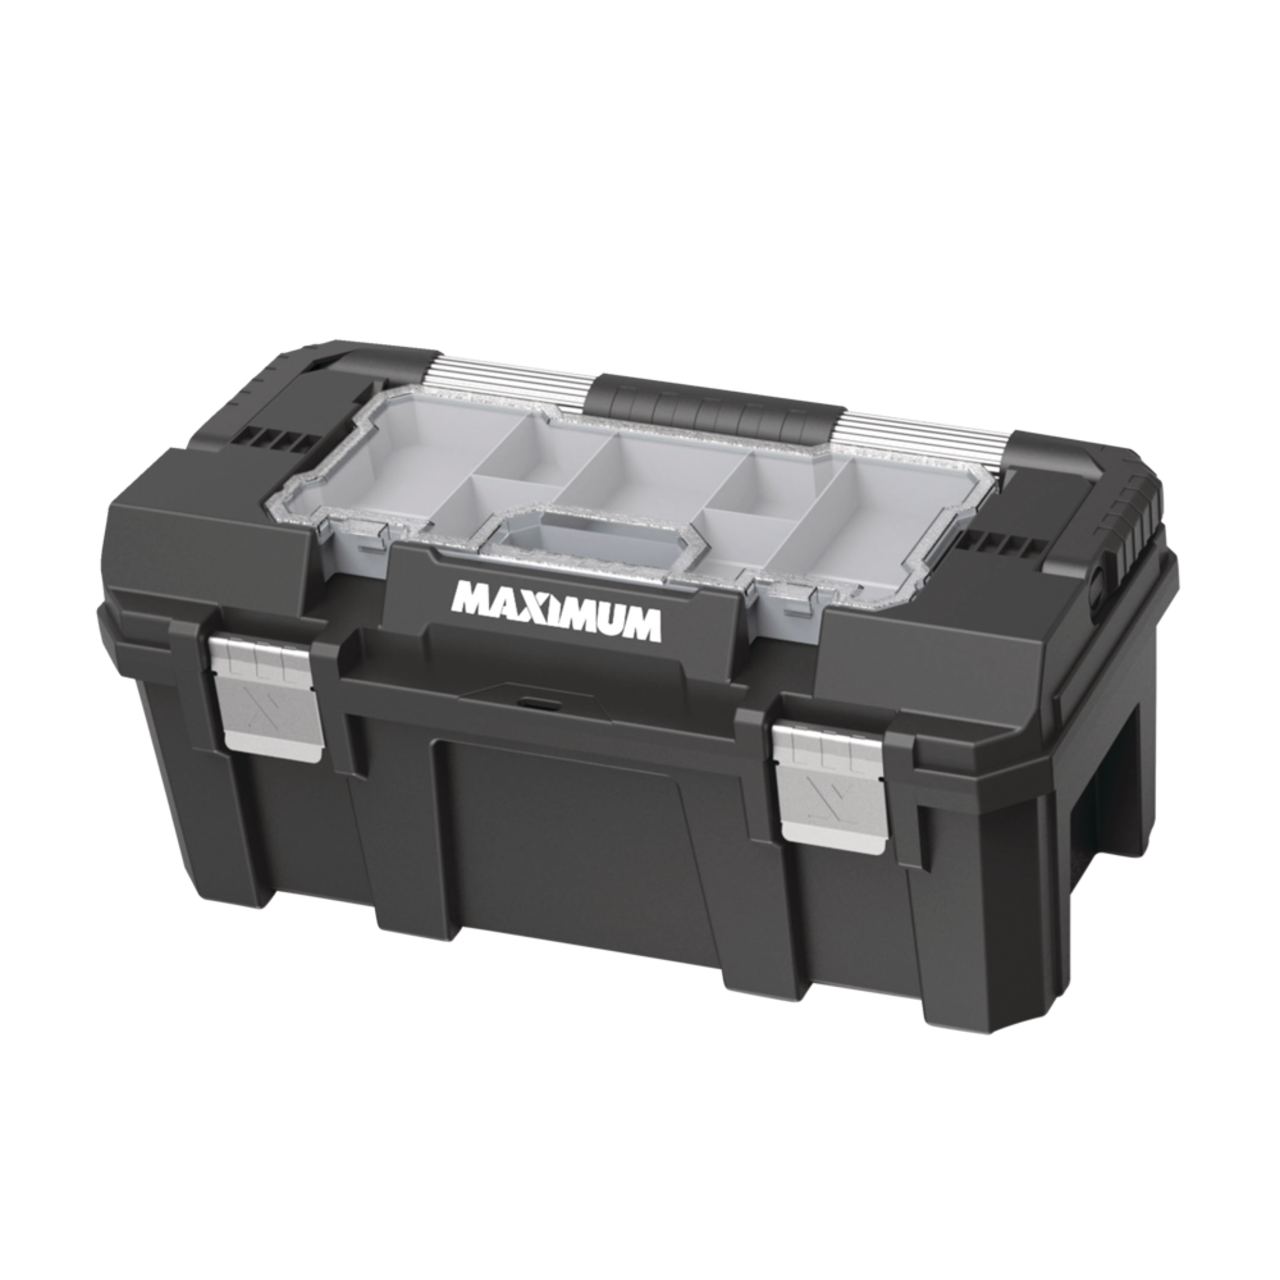 MAXIMUM Portable Plastic Tool Box w/ Removable Tray & Organizer, Black,  22-in